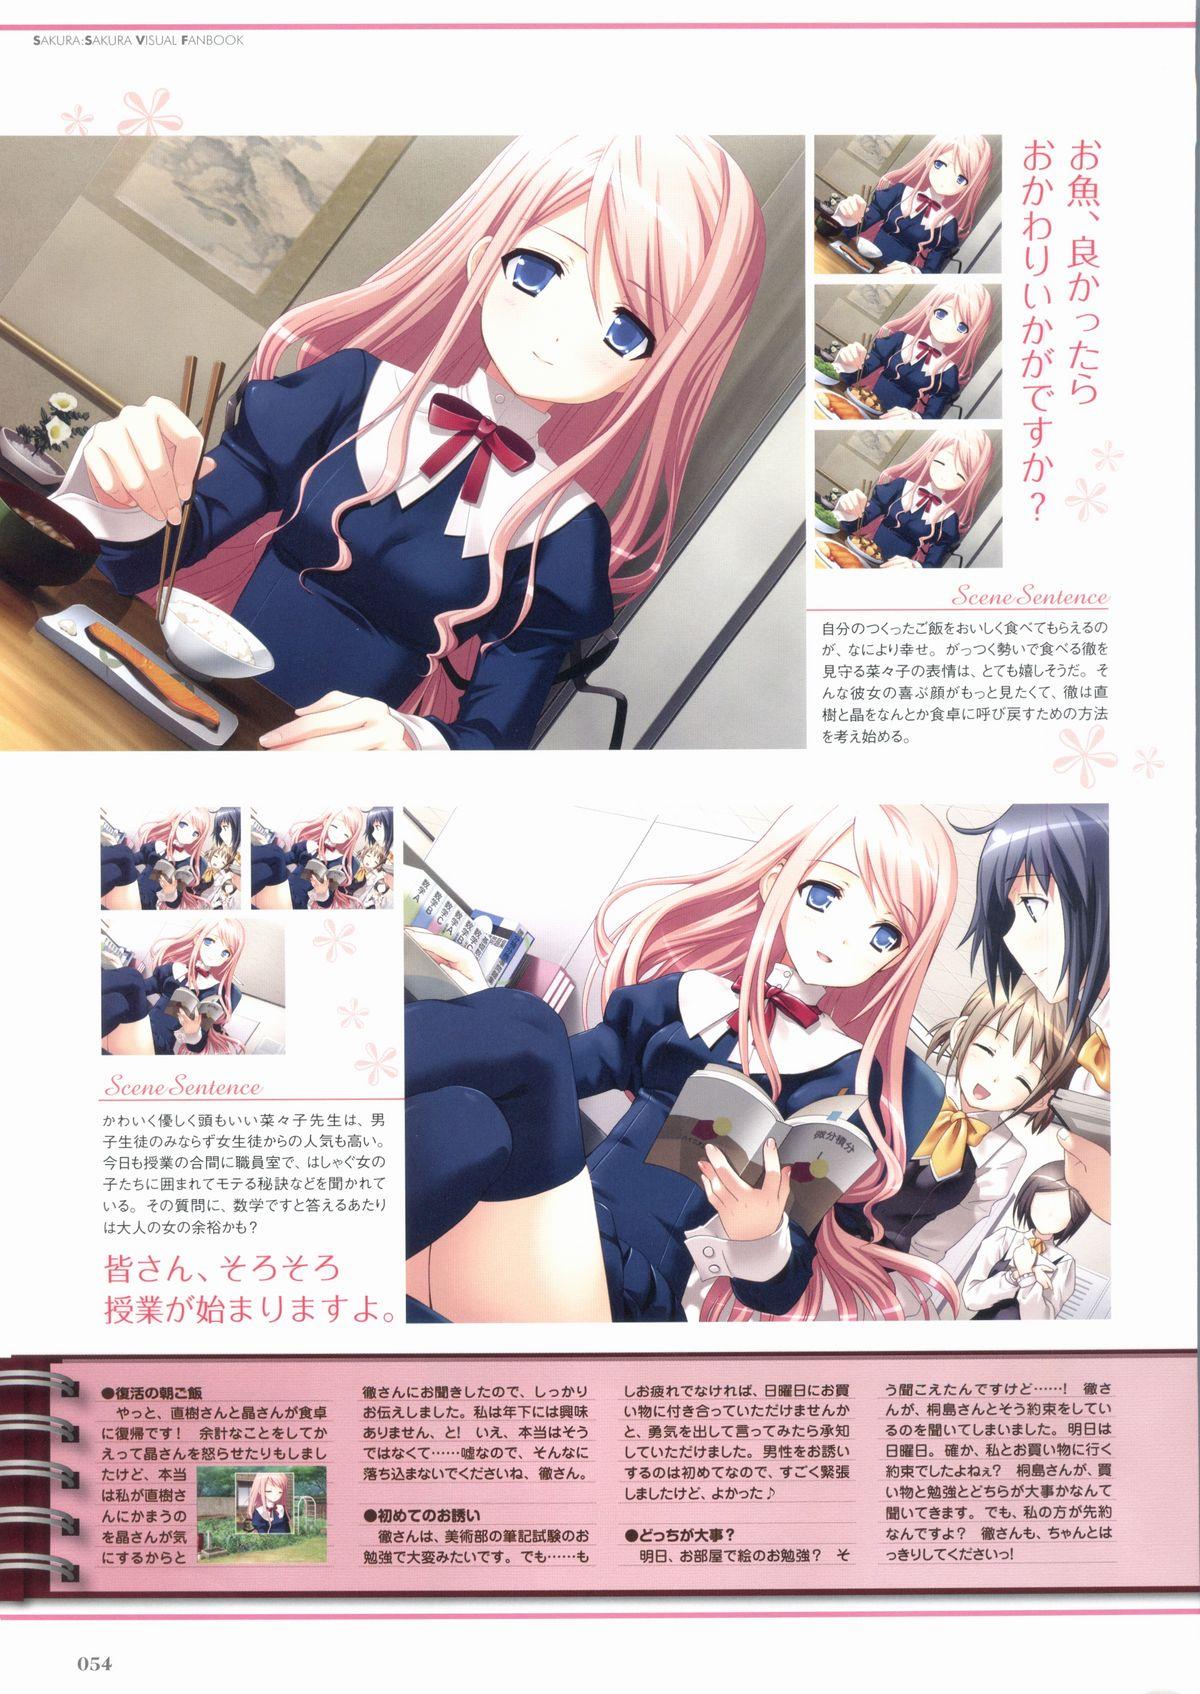 Sakura Sakura Visual Fan Book 58